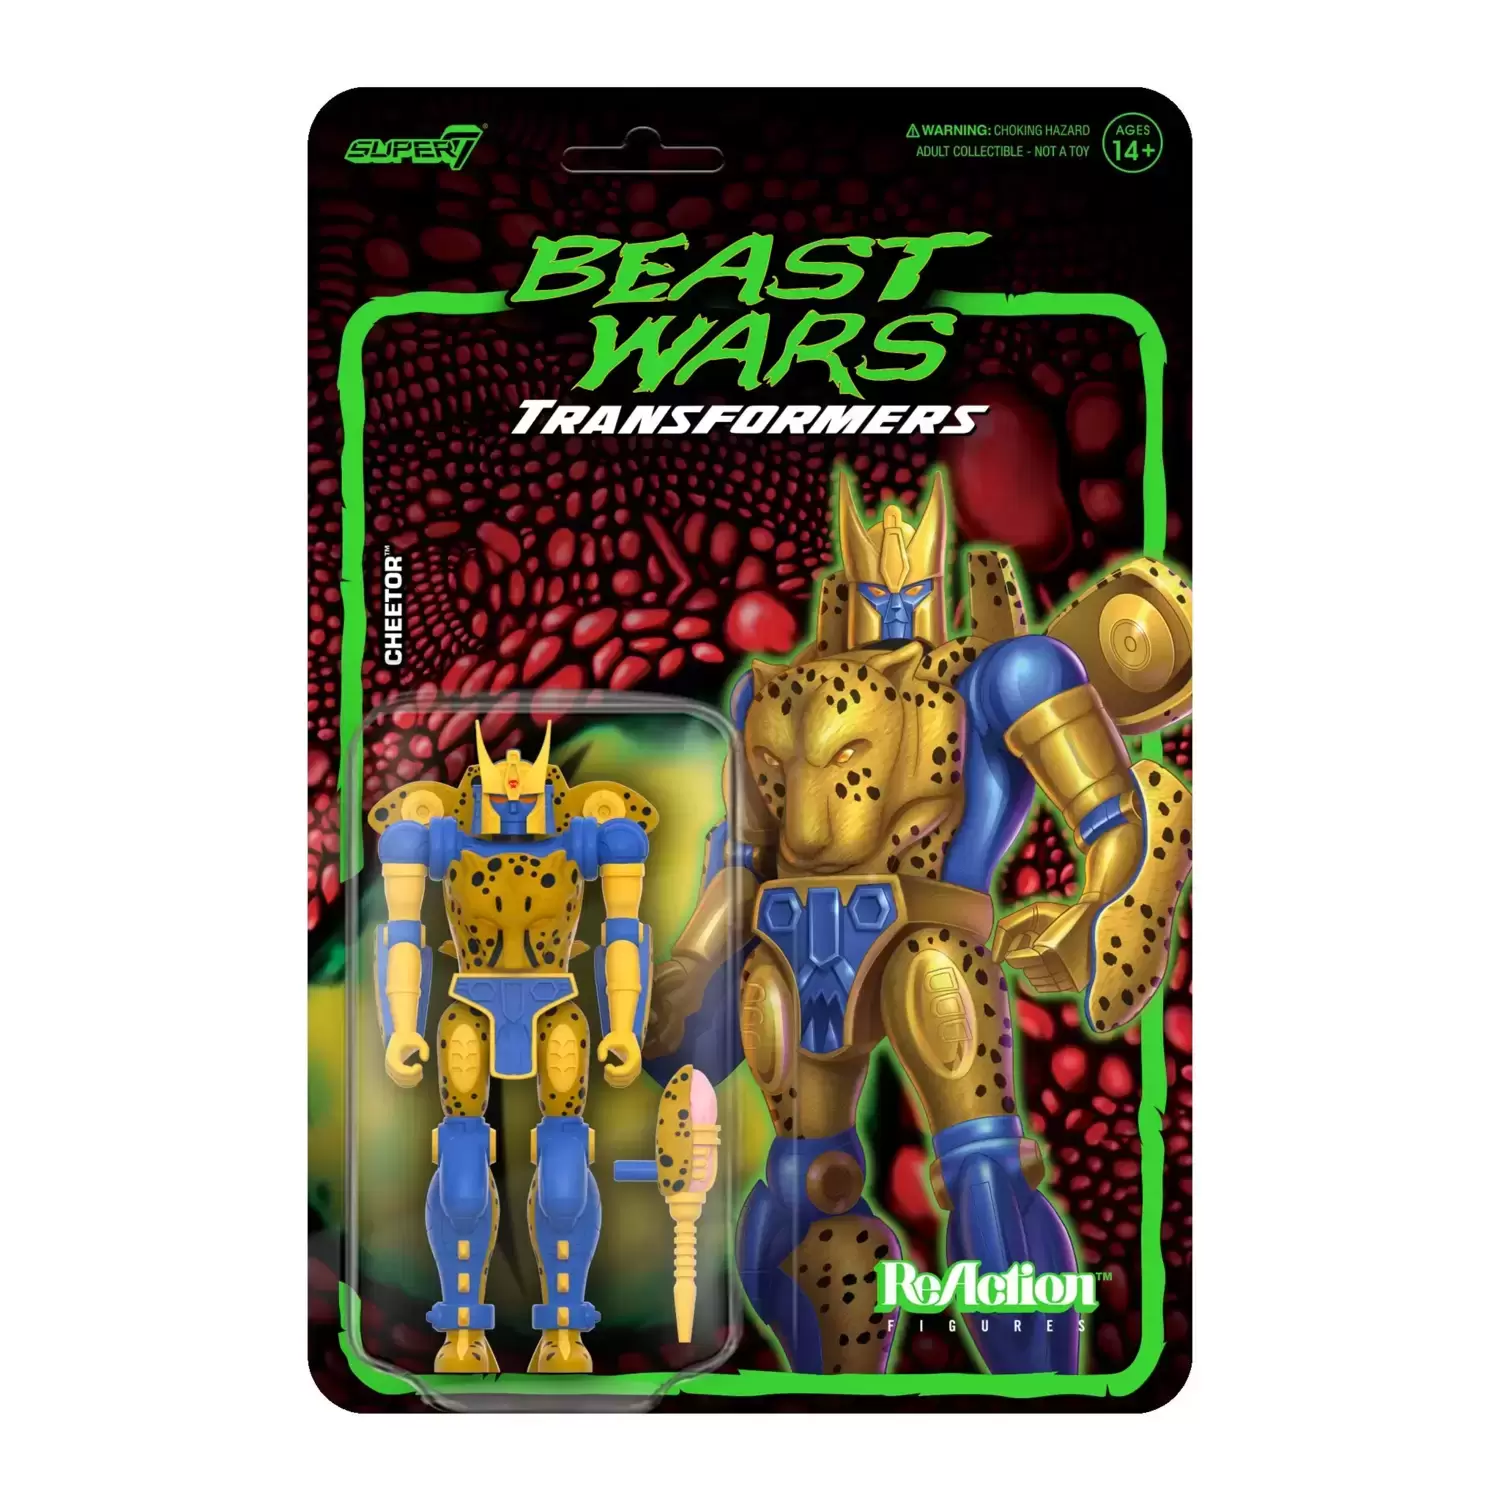 ReAction Figures - Transformers Beast Wars - Cheetor